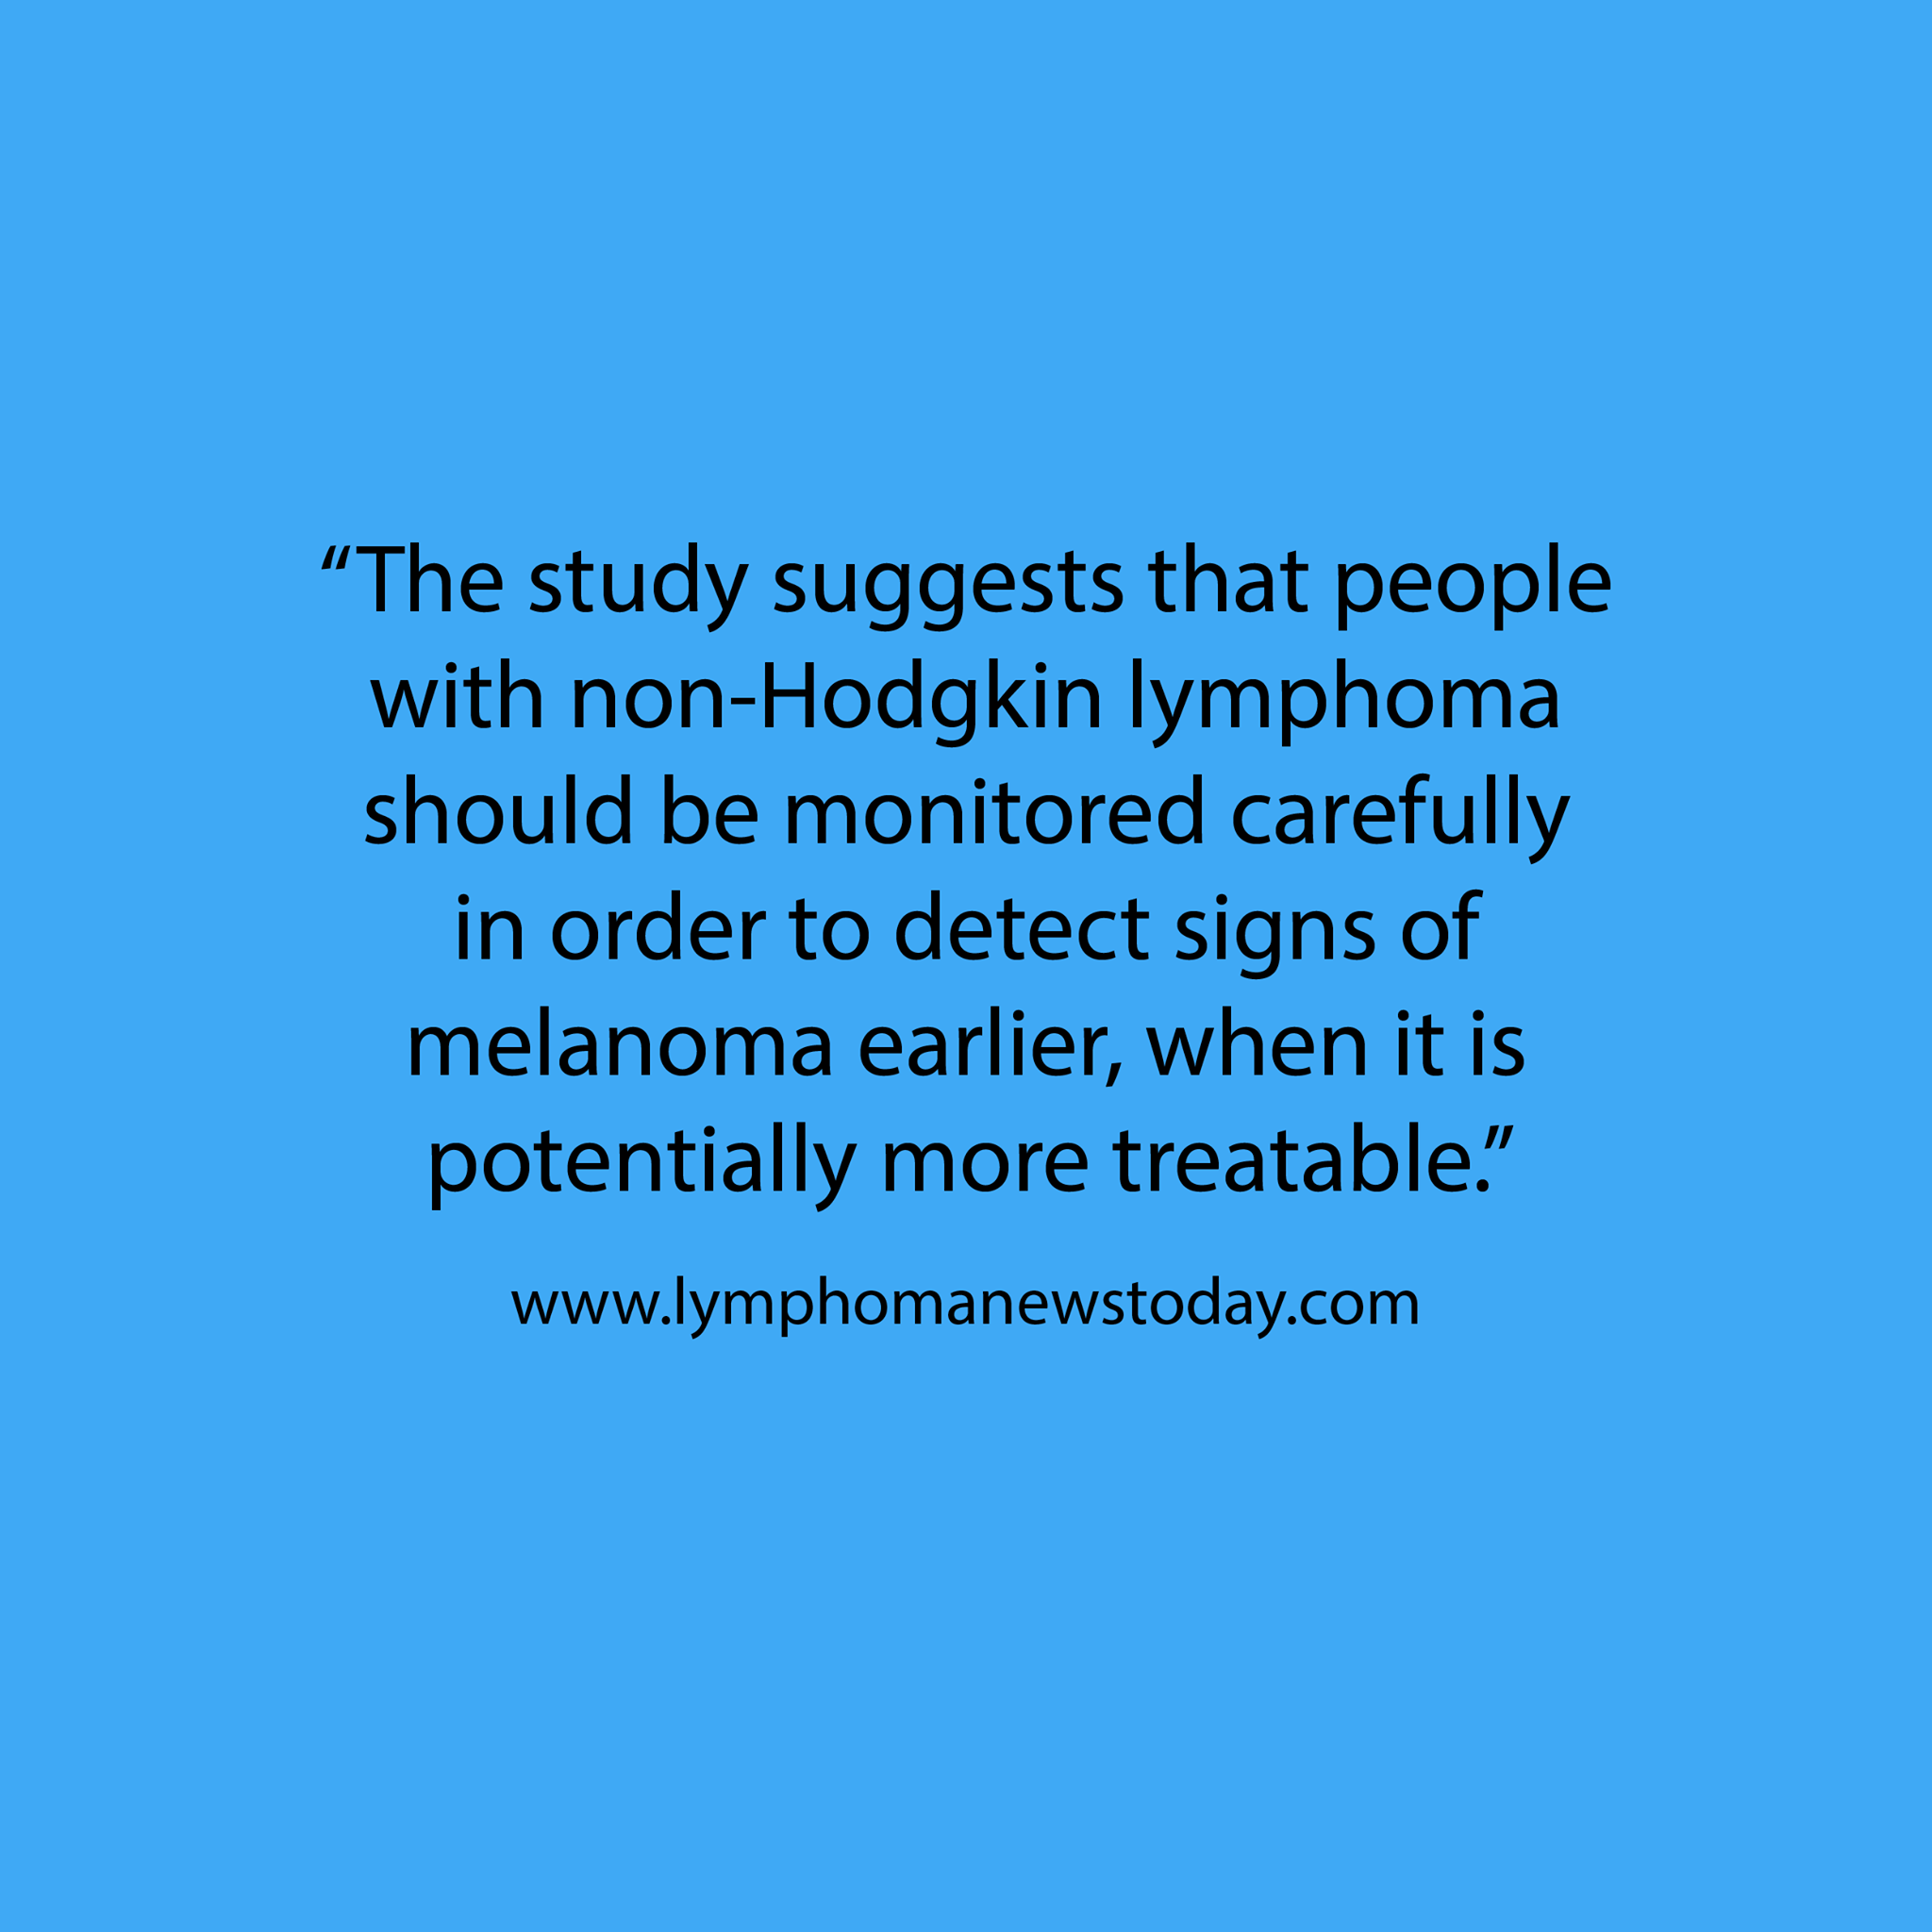 Researchers Identified Risk Factors for Melanoma in Non-Hodgkin Lymphoma